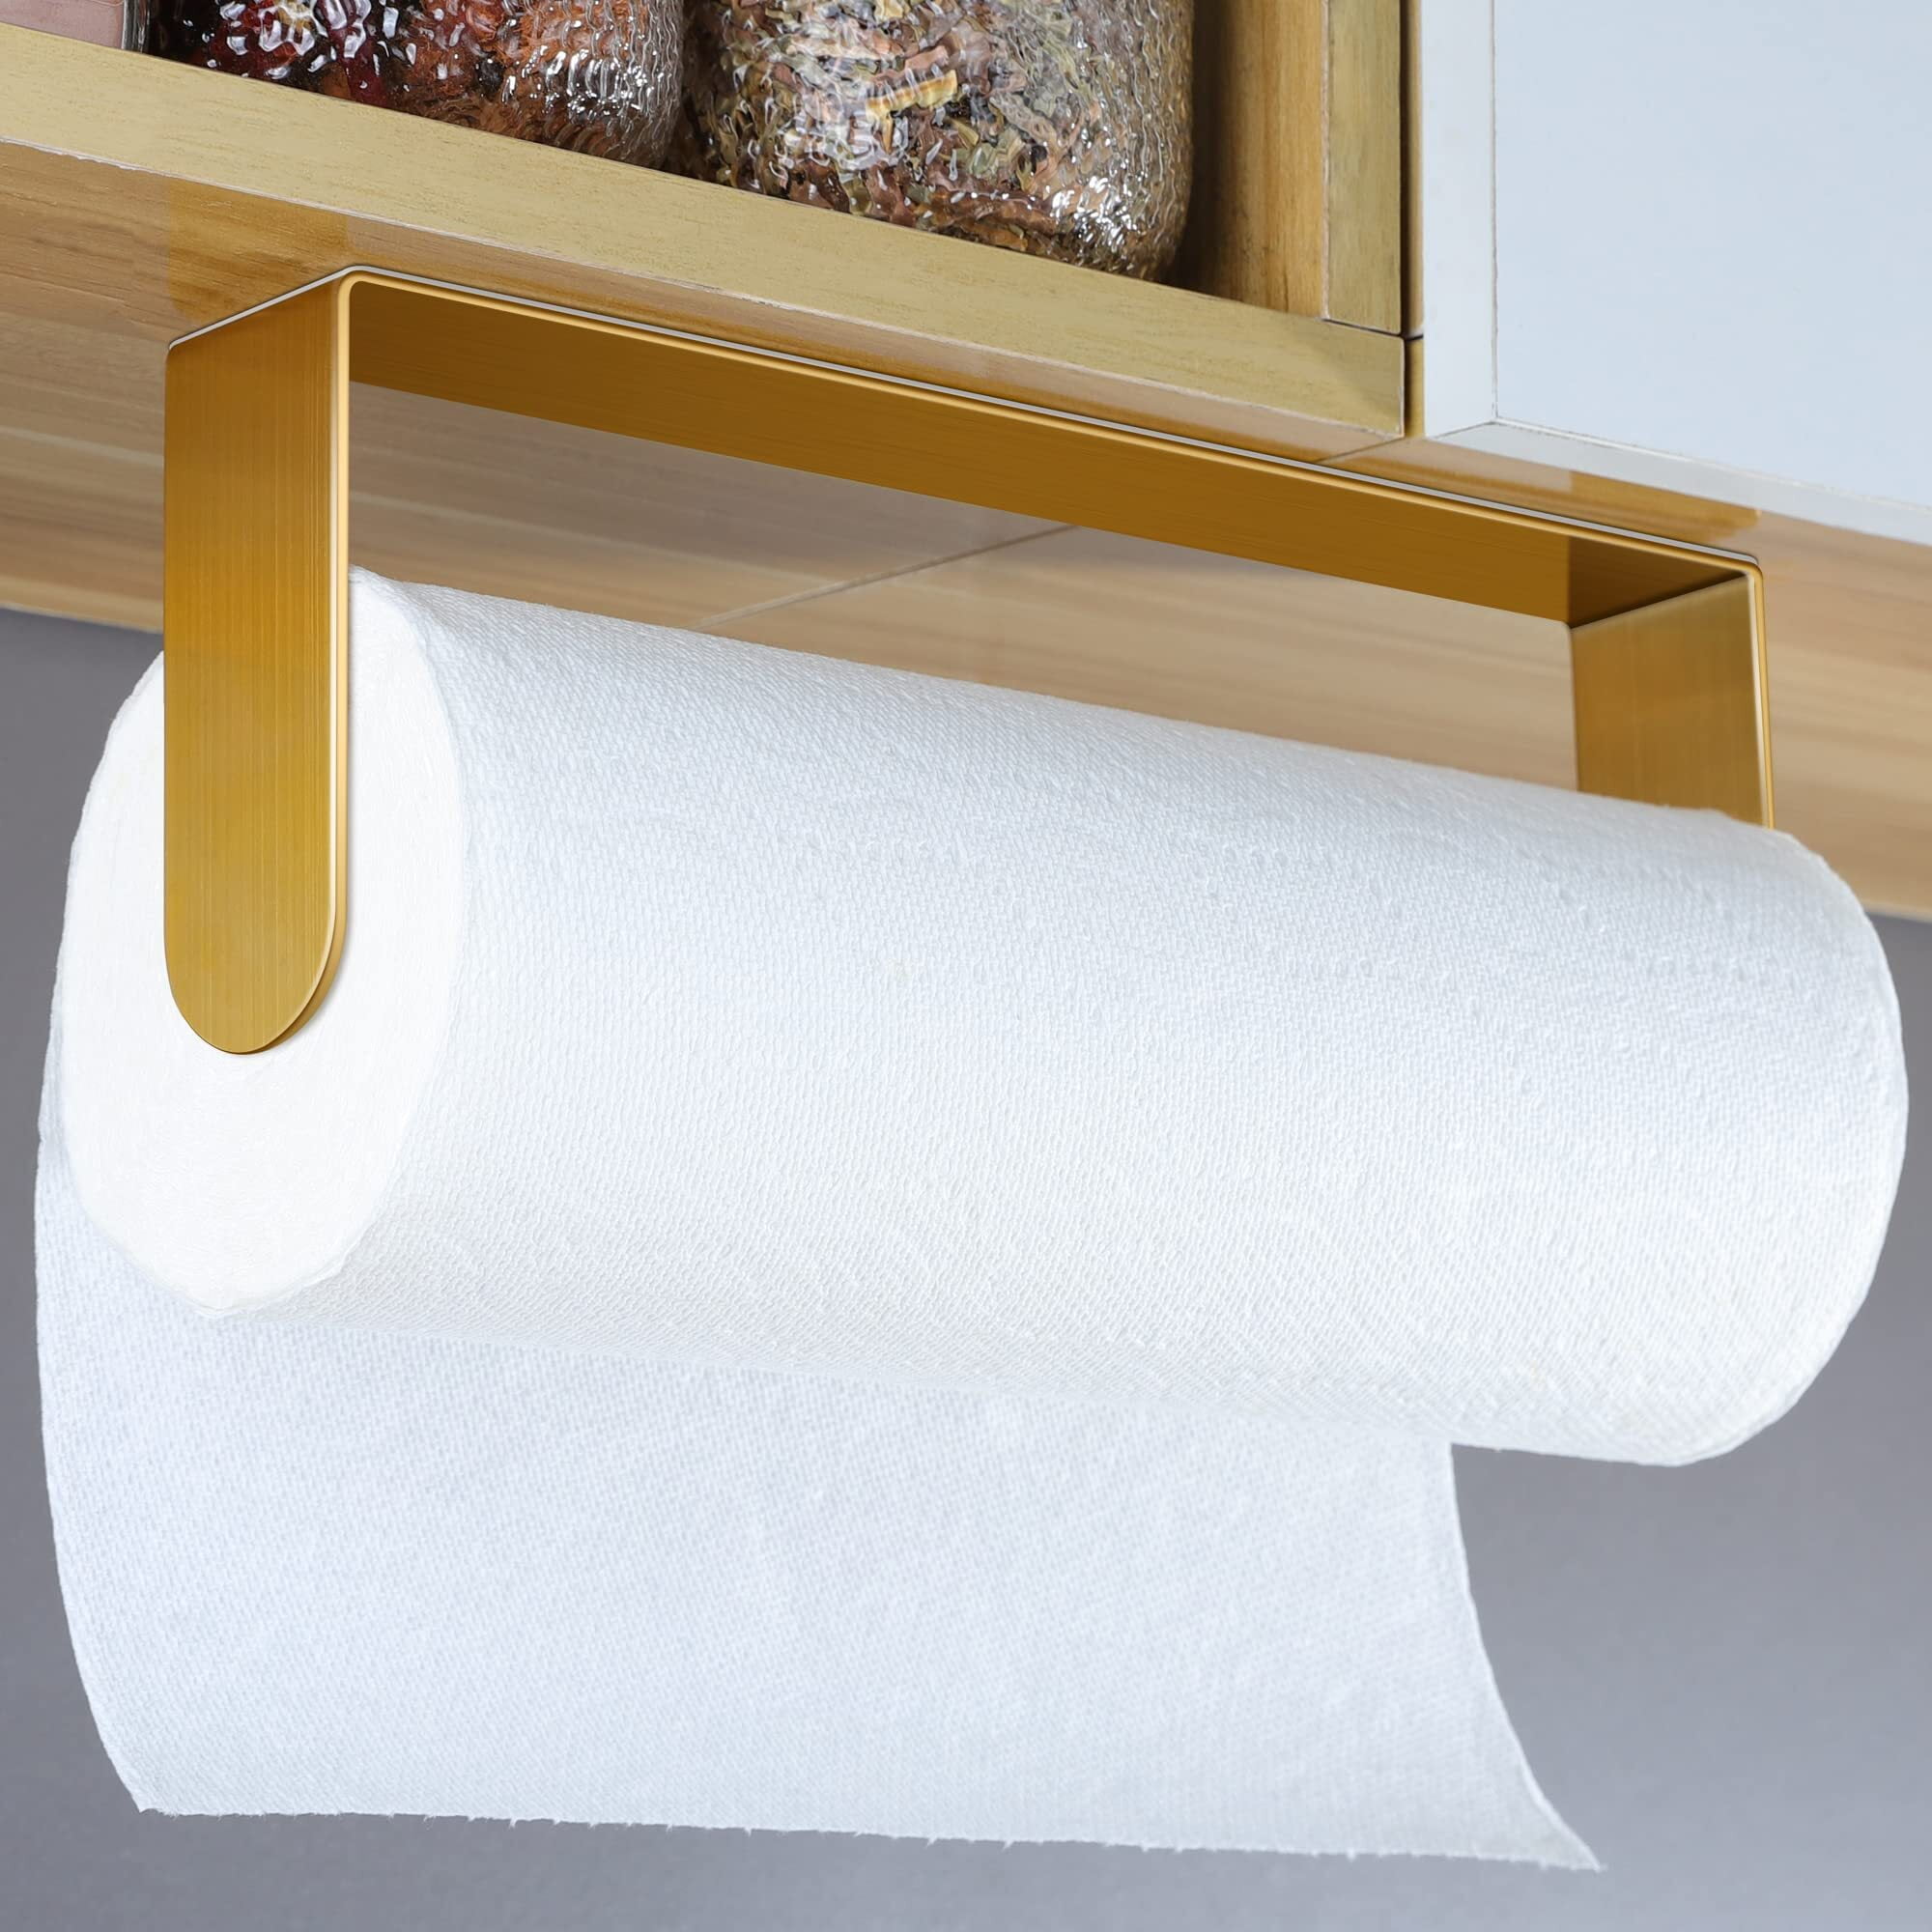  Paper Towel Holder - Eolax Under Cabinet Paper Towel